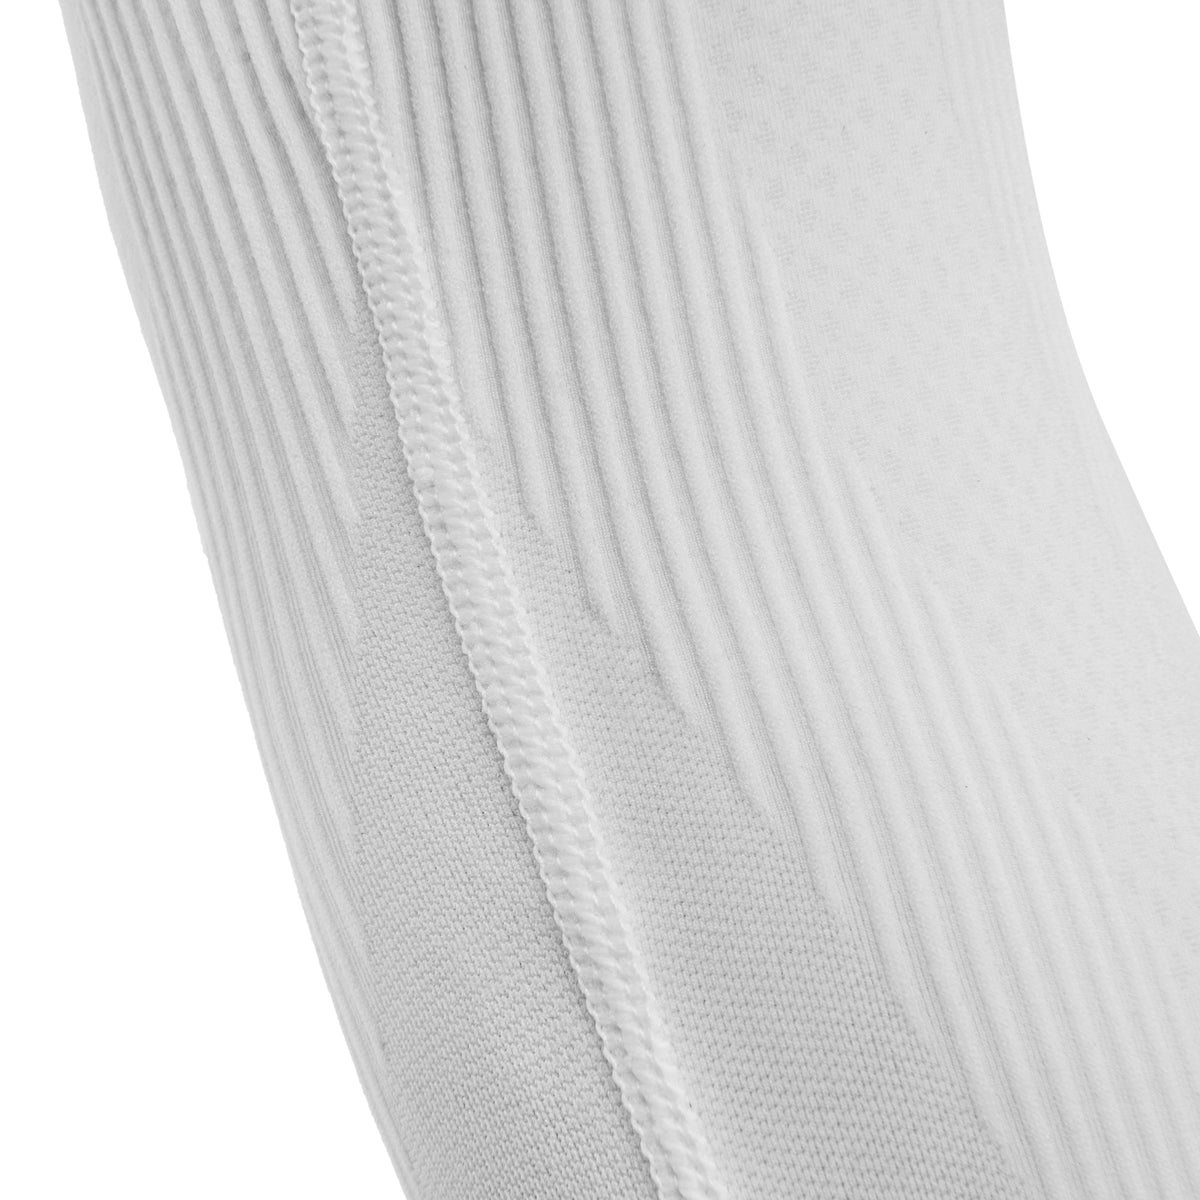 adidas Compression Arm Sleeves white seam closeup